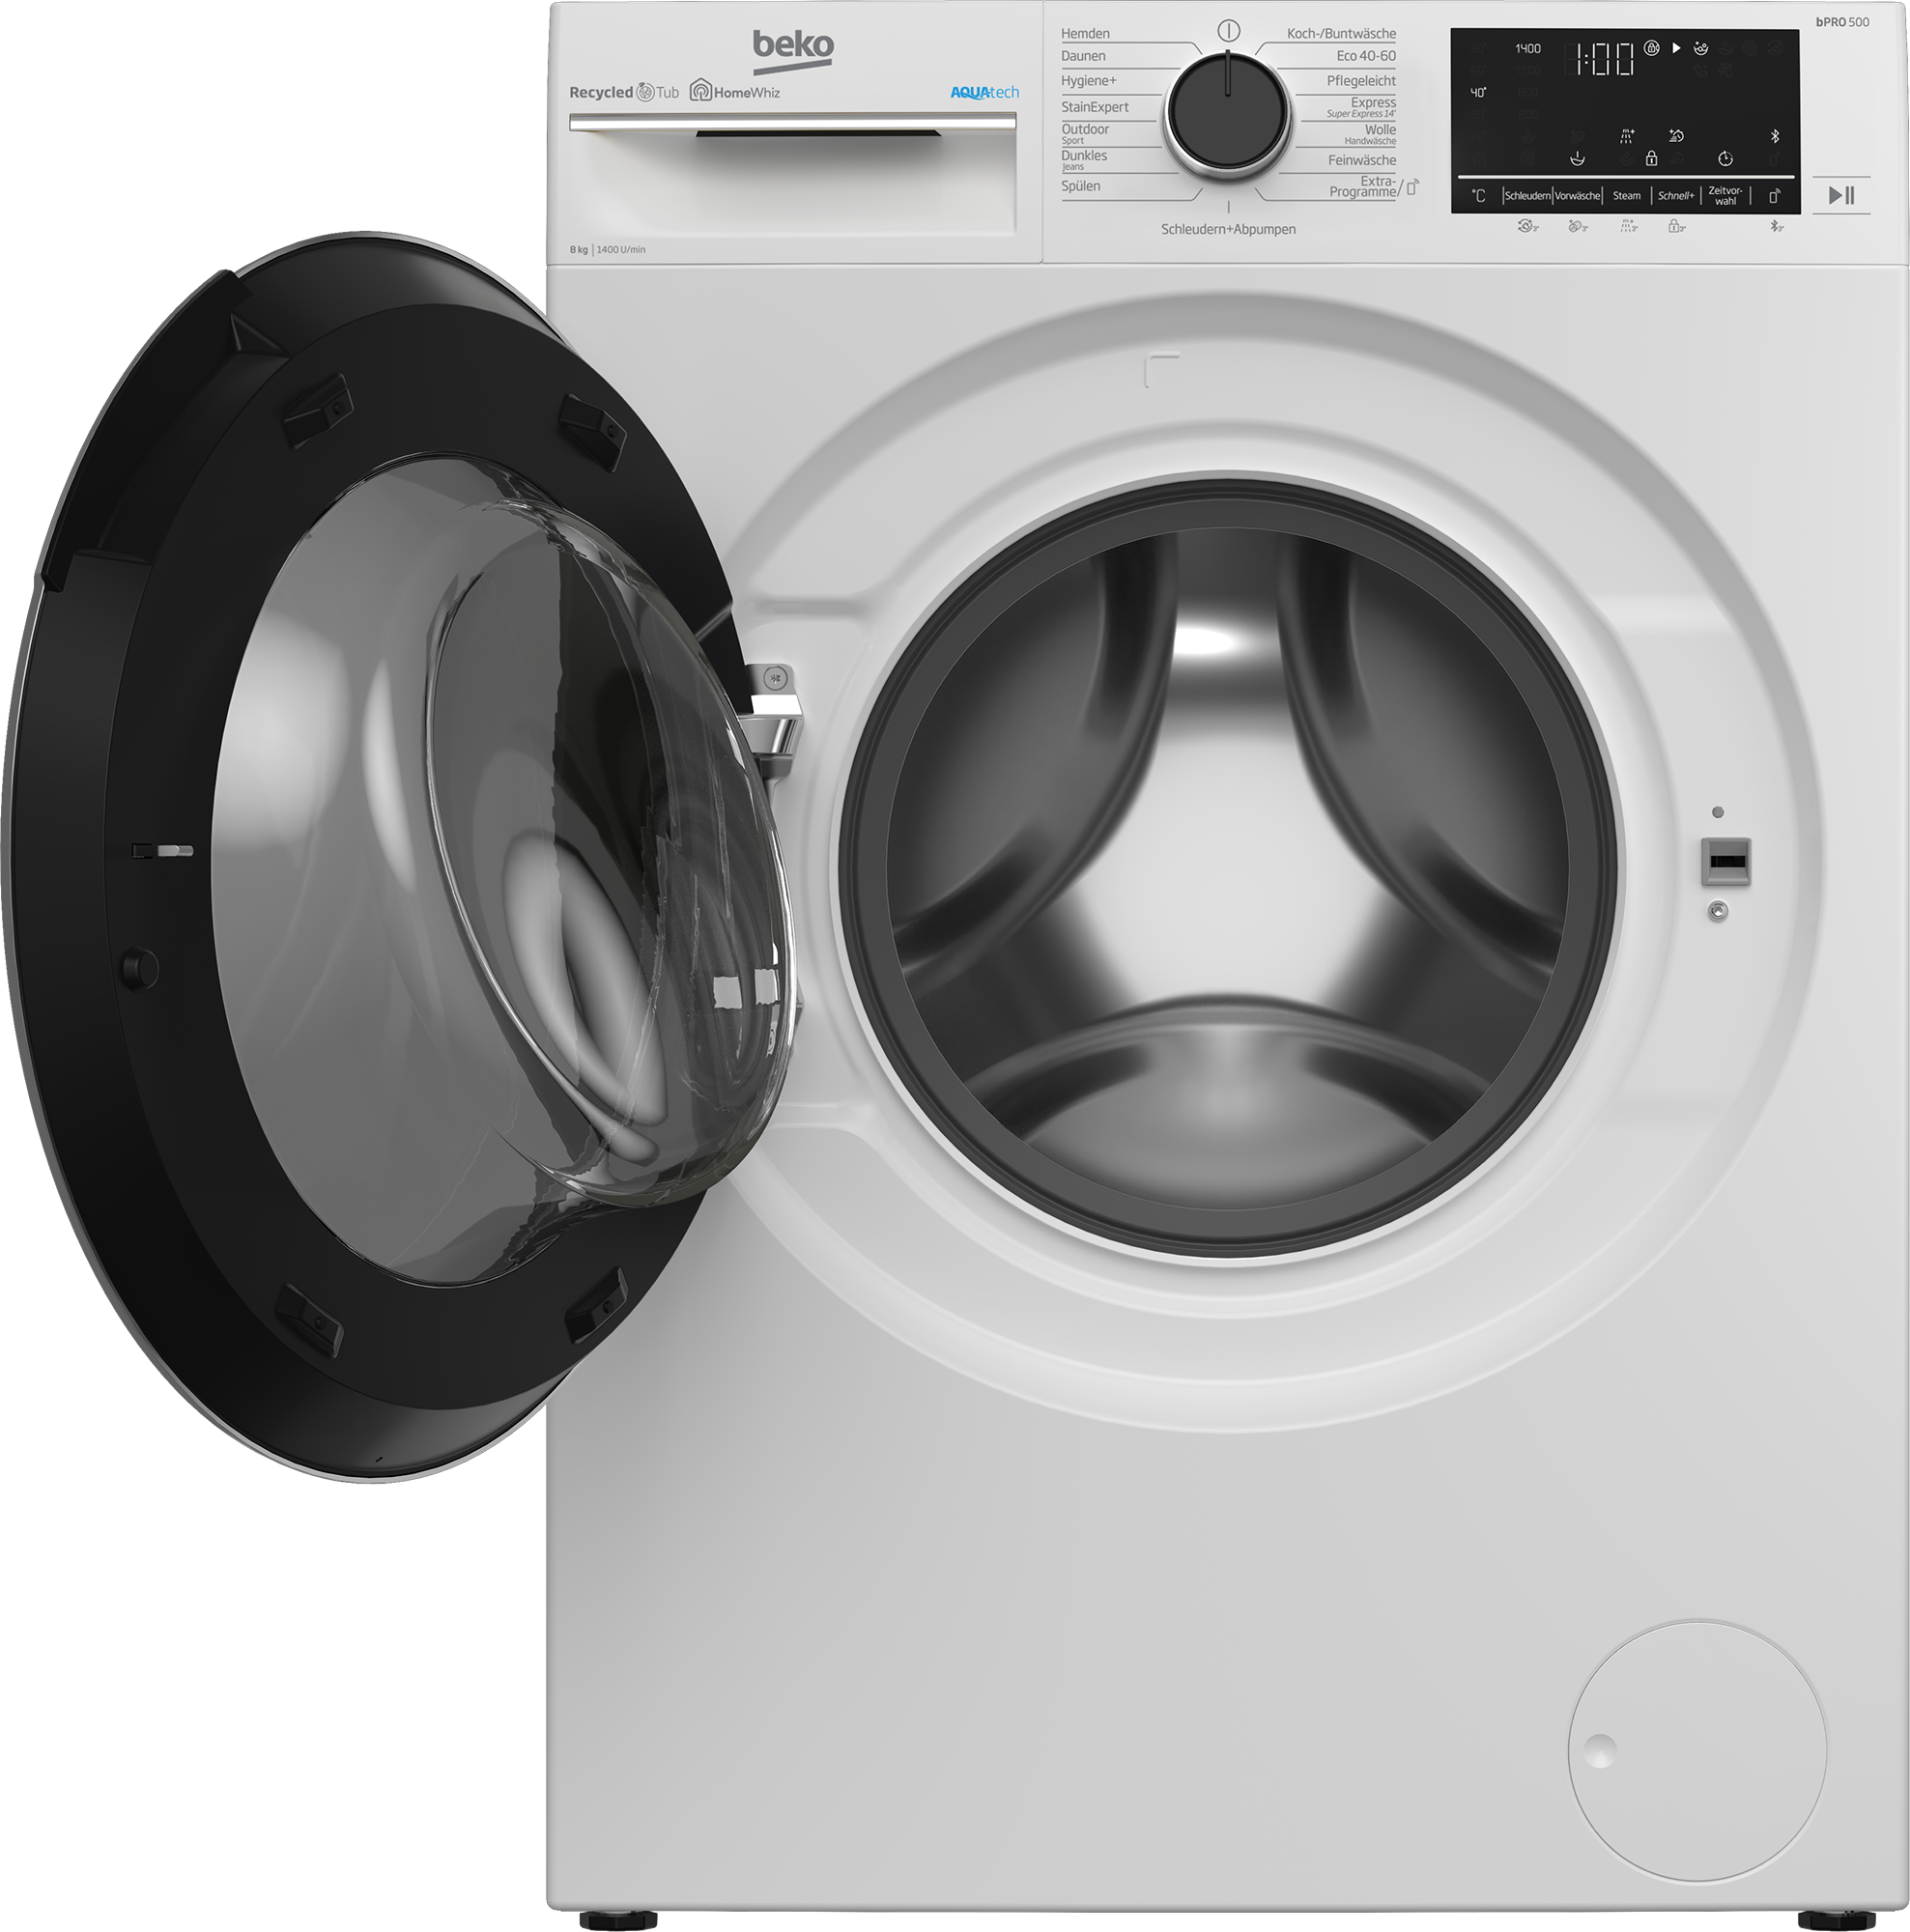 Washing (8 | Freestanding 1400 BEKO Machine rpm) kg, B5WFU58418W |